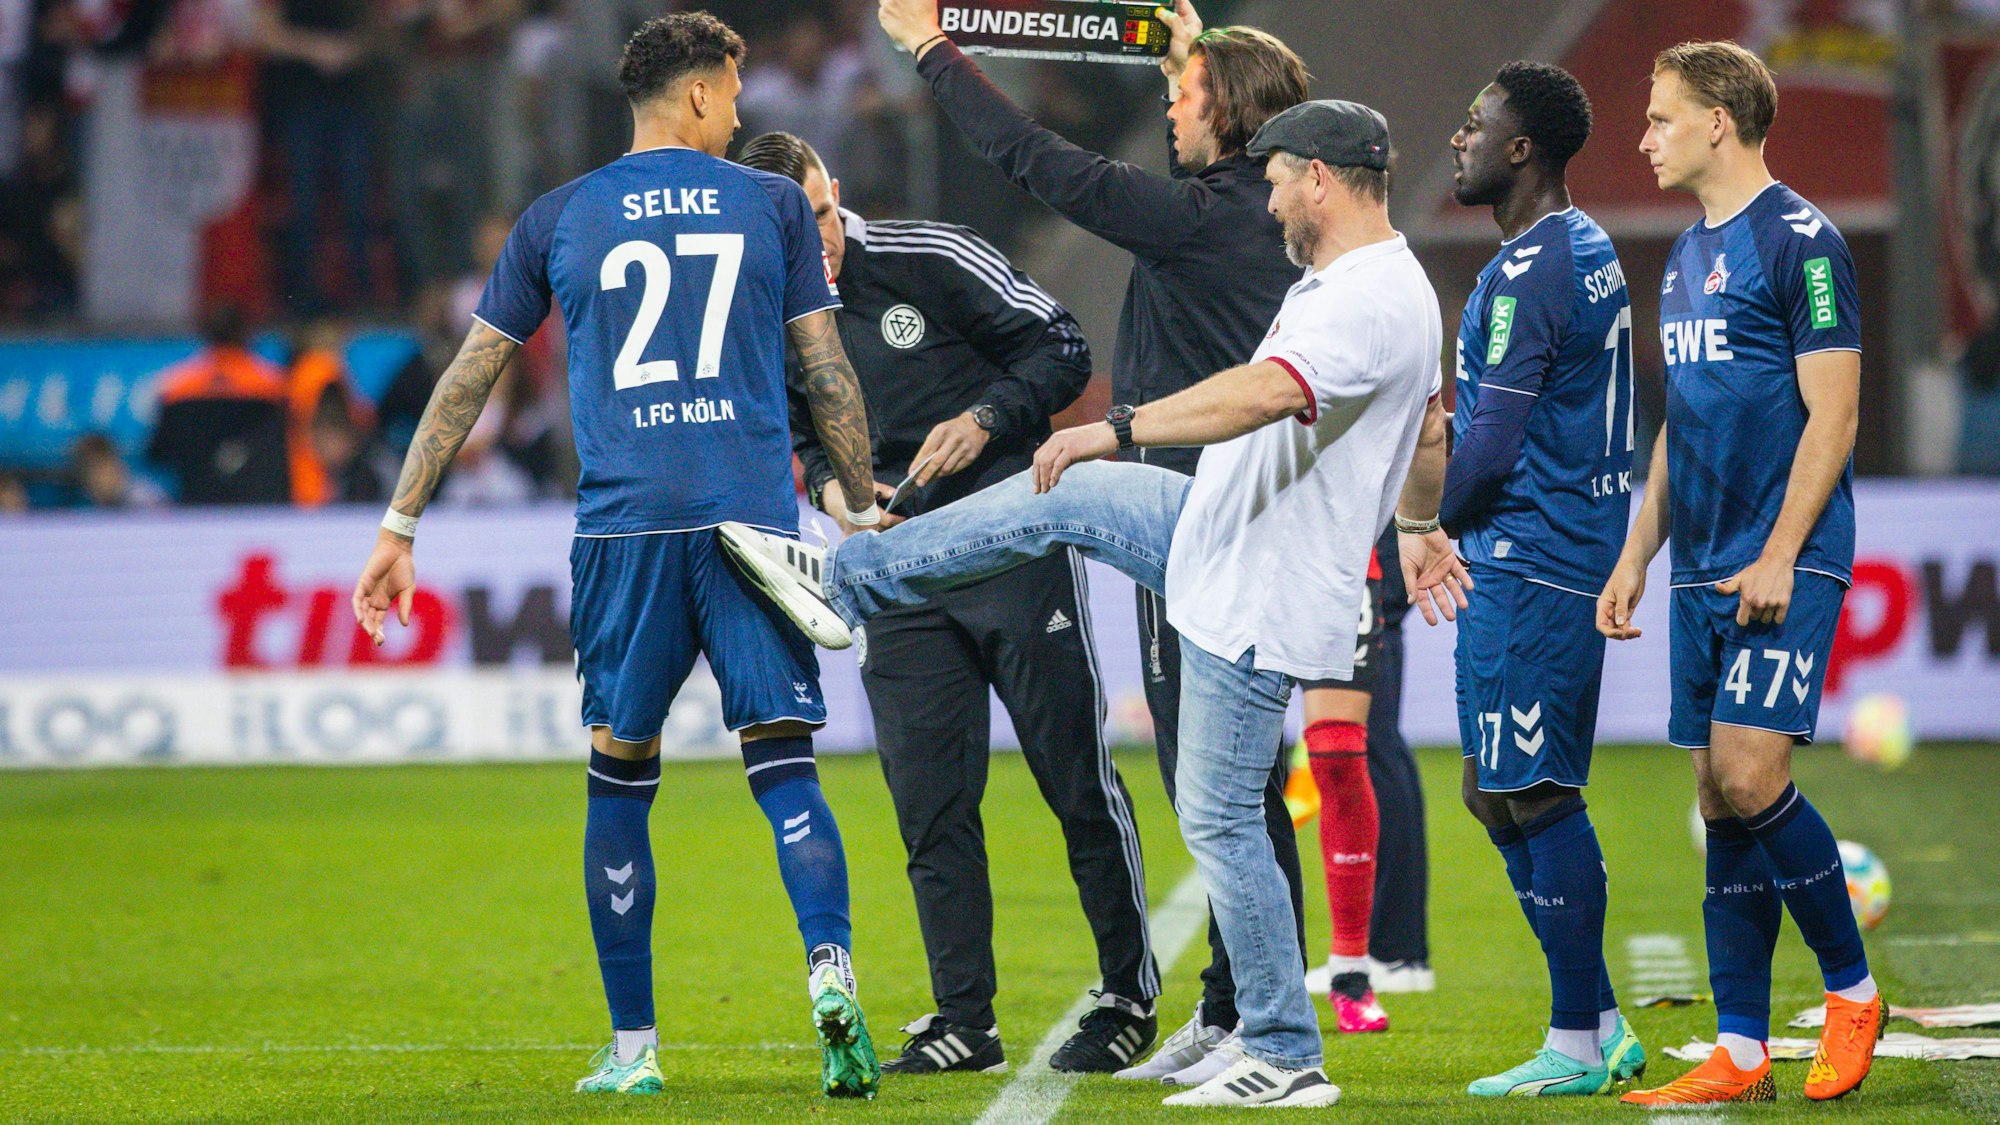 Davie Selke flehte zwar um seine Auswechslung, doch Steffen Baumgart beförderte den Stürmer des 1. FC Köln zurück auf den Platz.